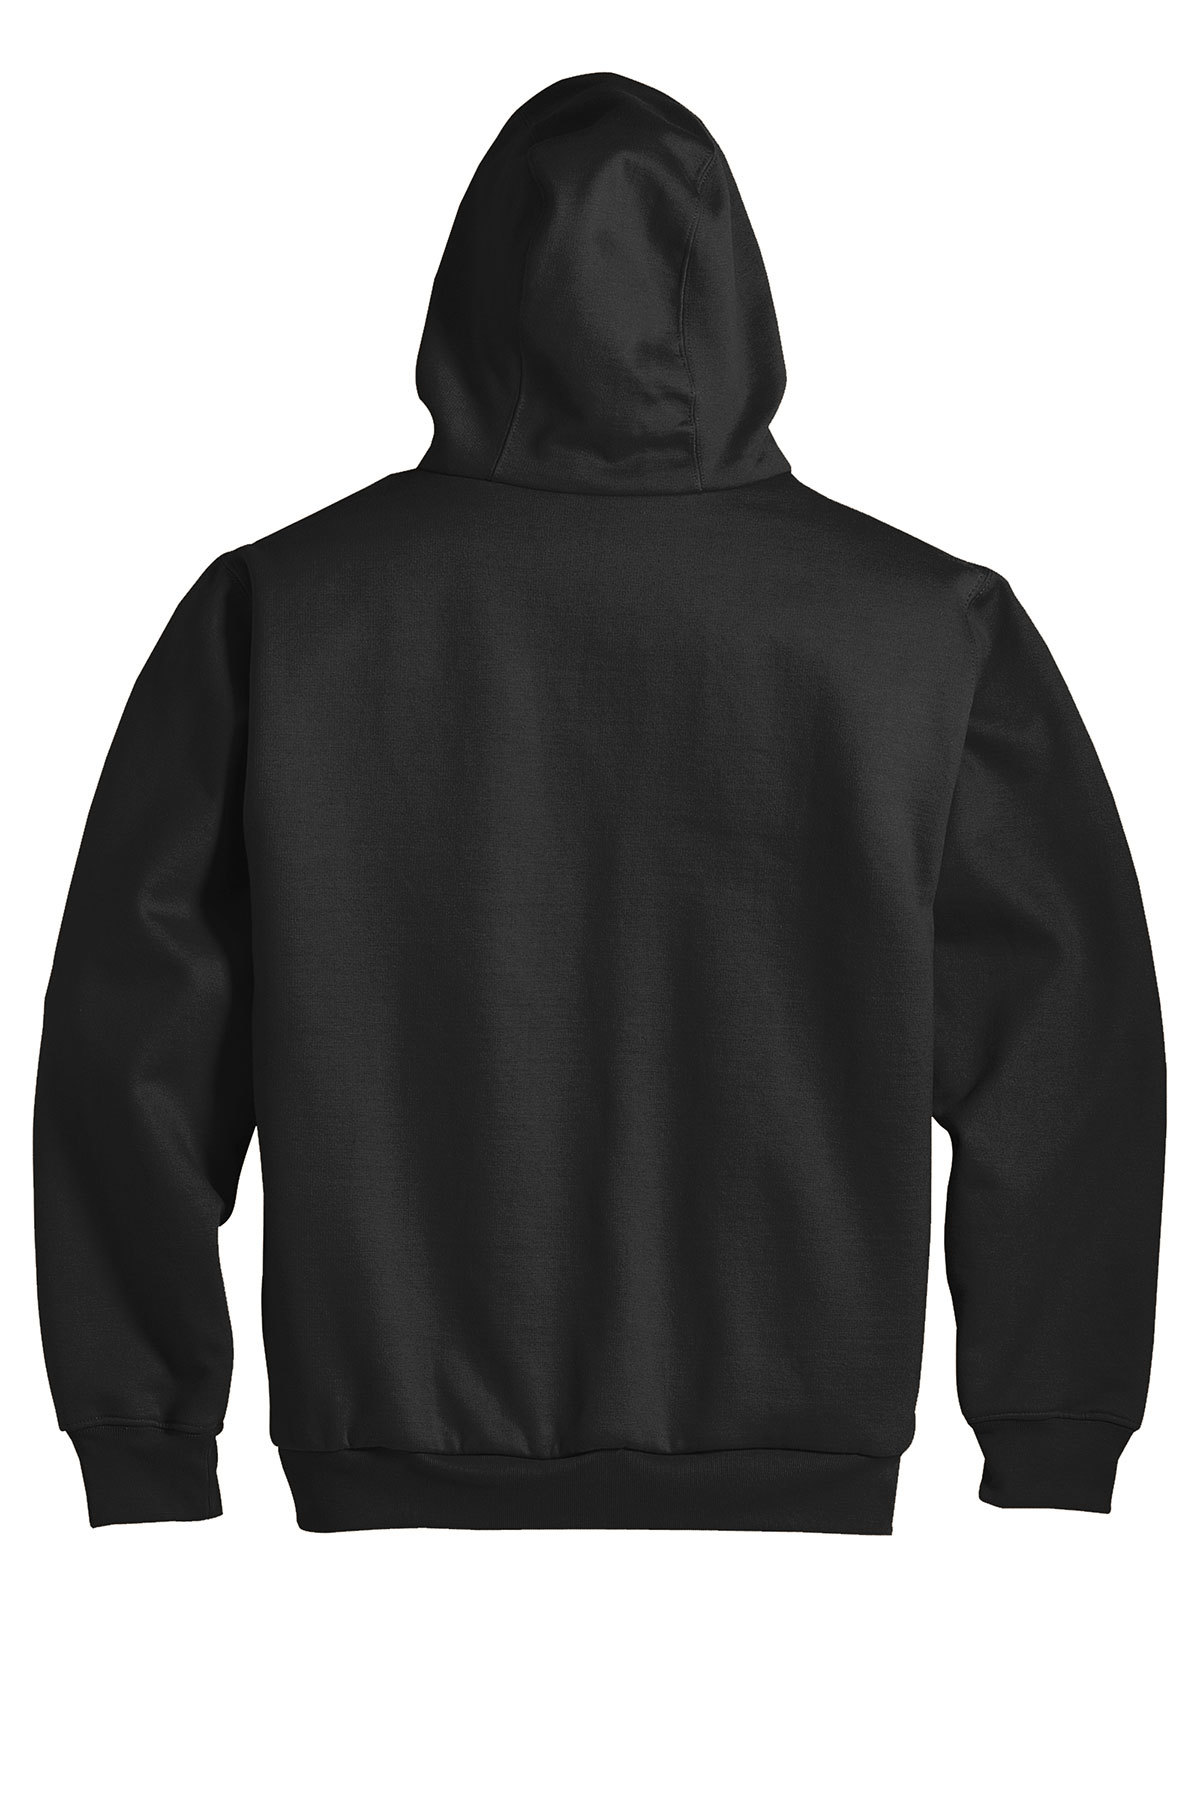 CornerStone - Heavyweight Full-Zip Hooded Sweatshirt with Thermal ...